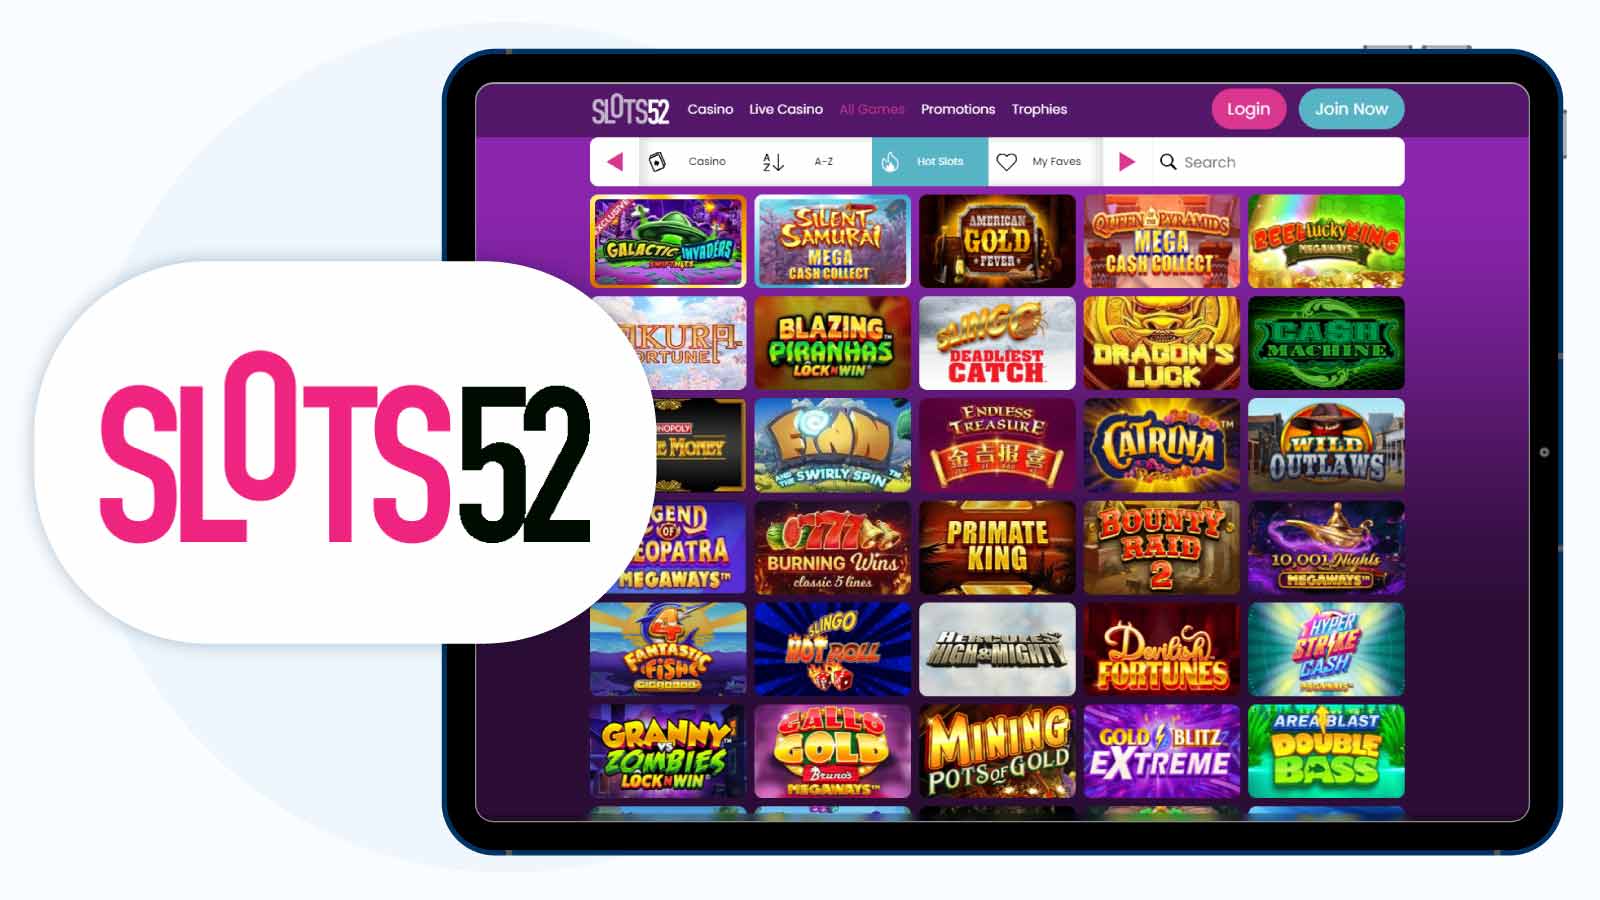 Best £5 Deposit Site for Starburst Spins Slots52